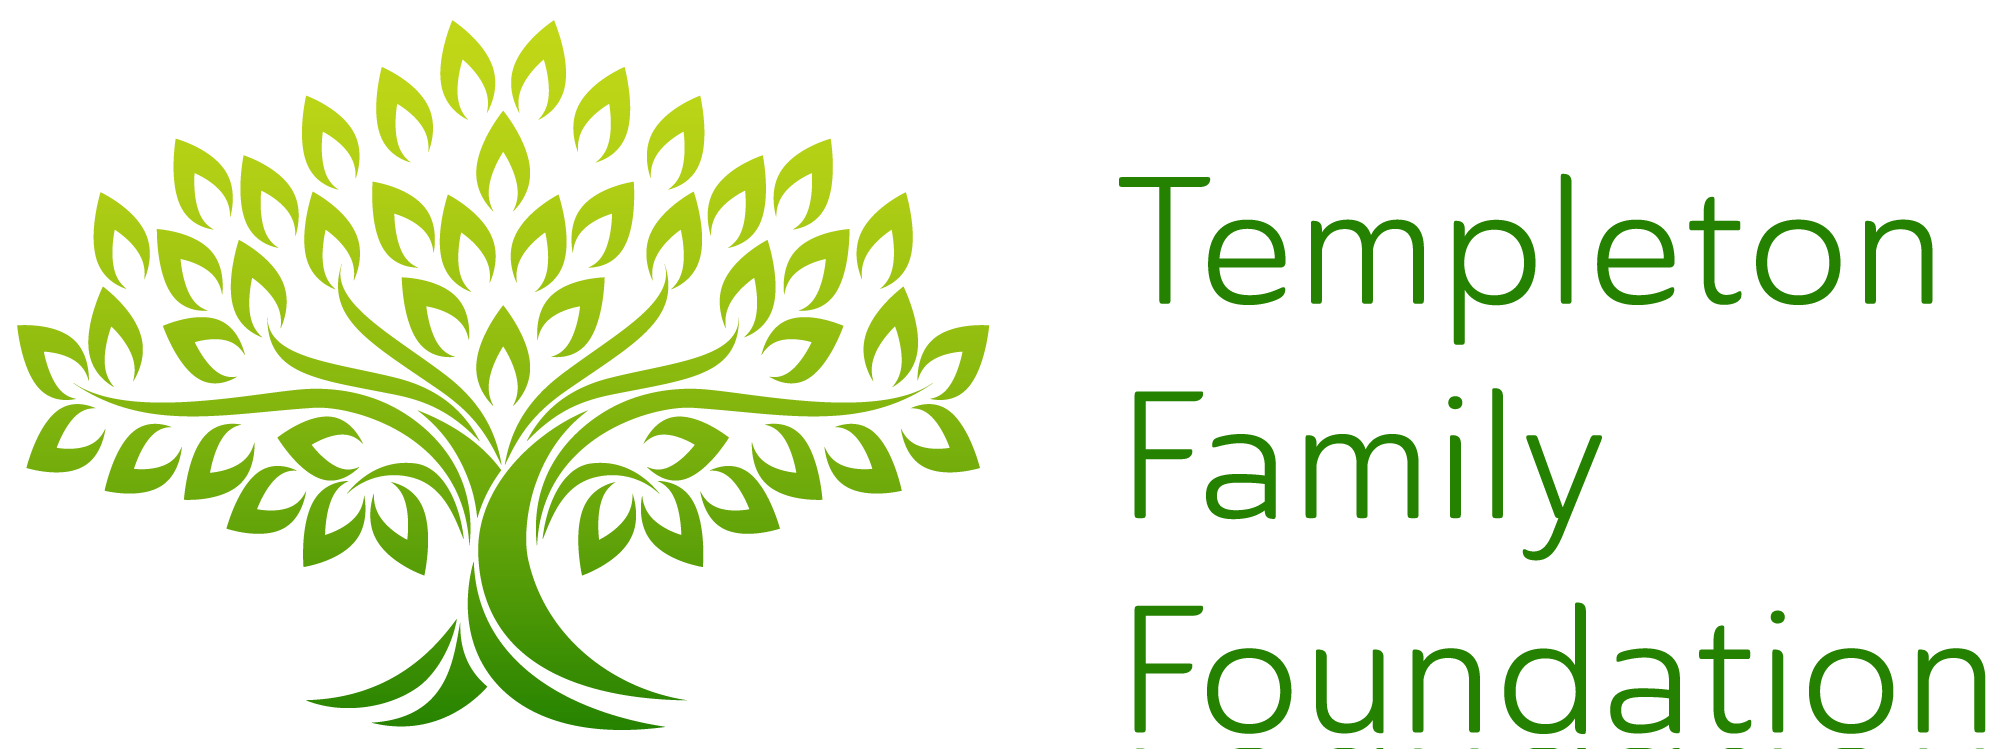 Templeton Family Foundation